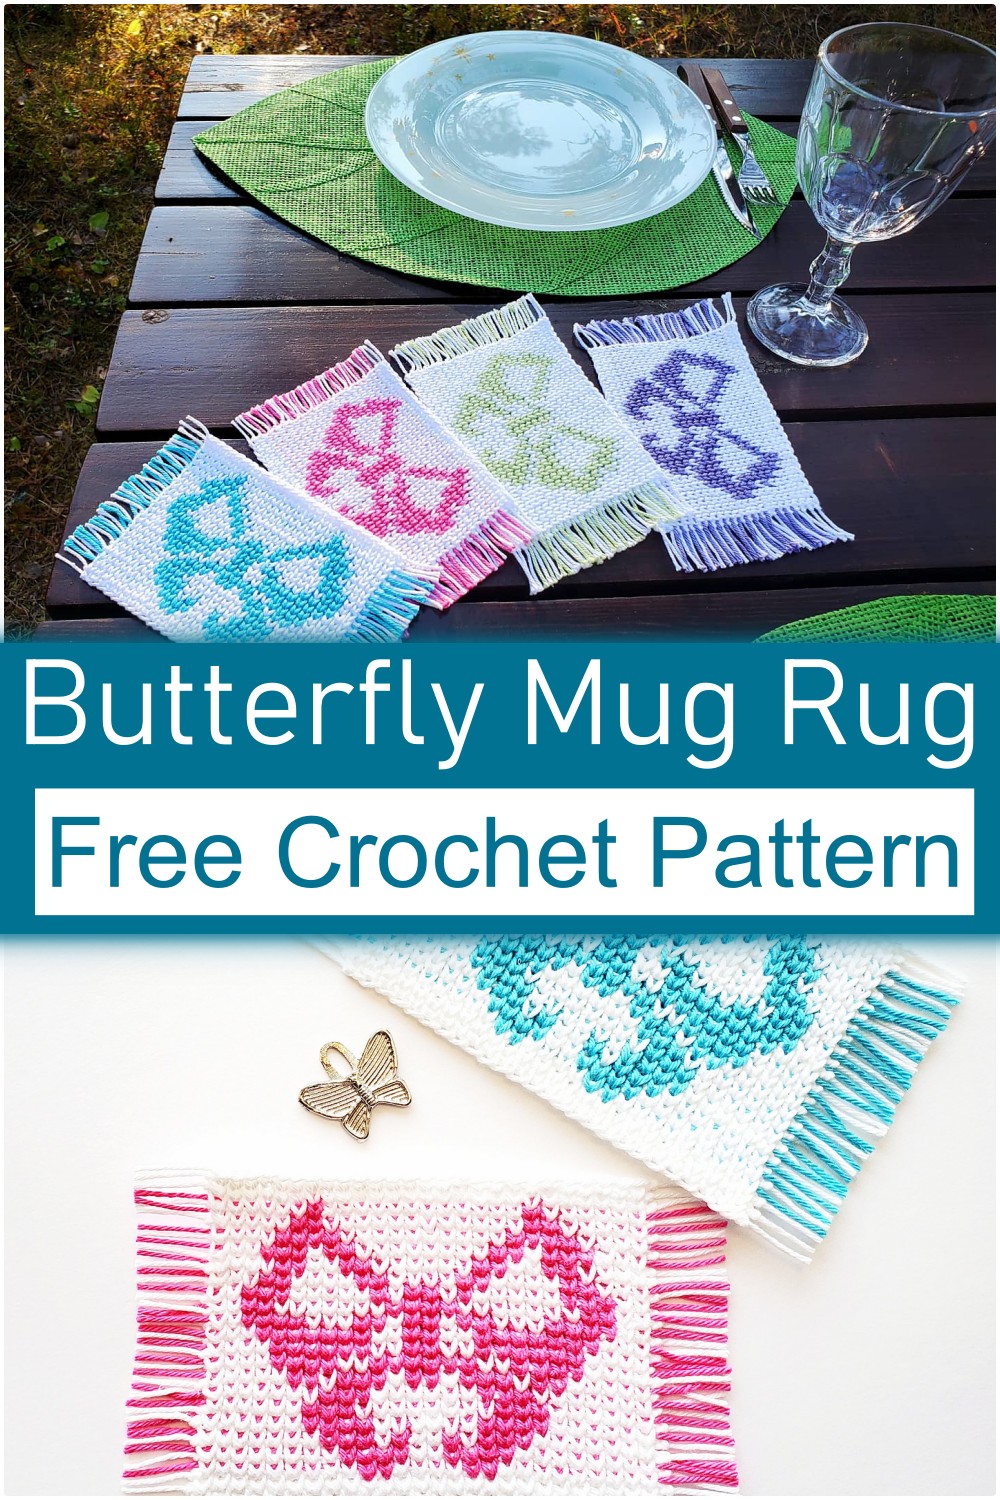 Crochet Mug Rug Pattern With Butterfly Design